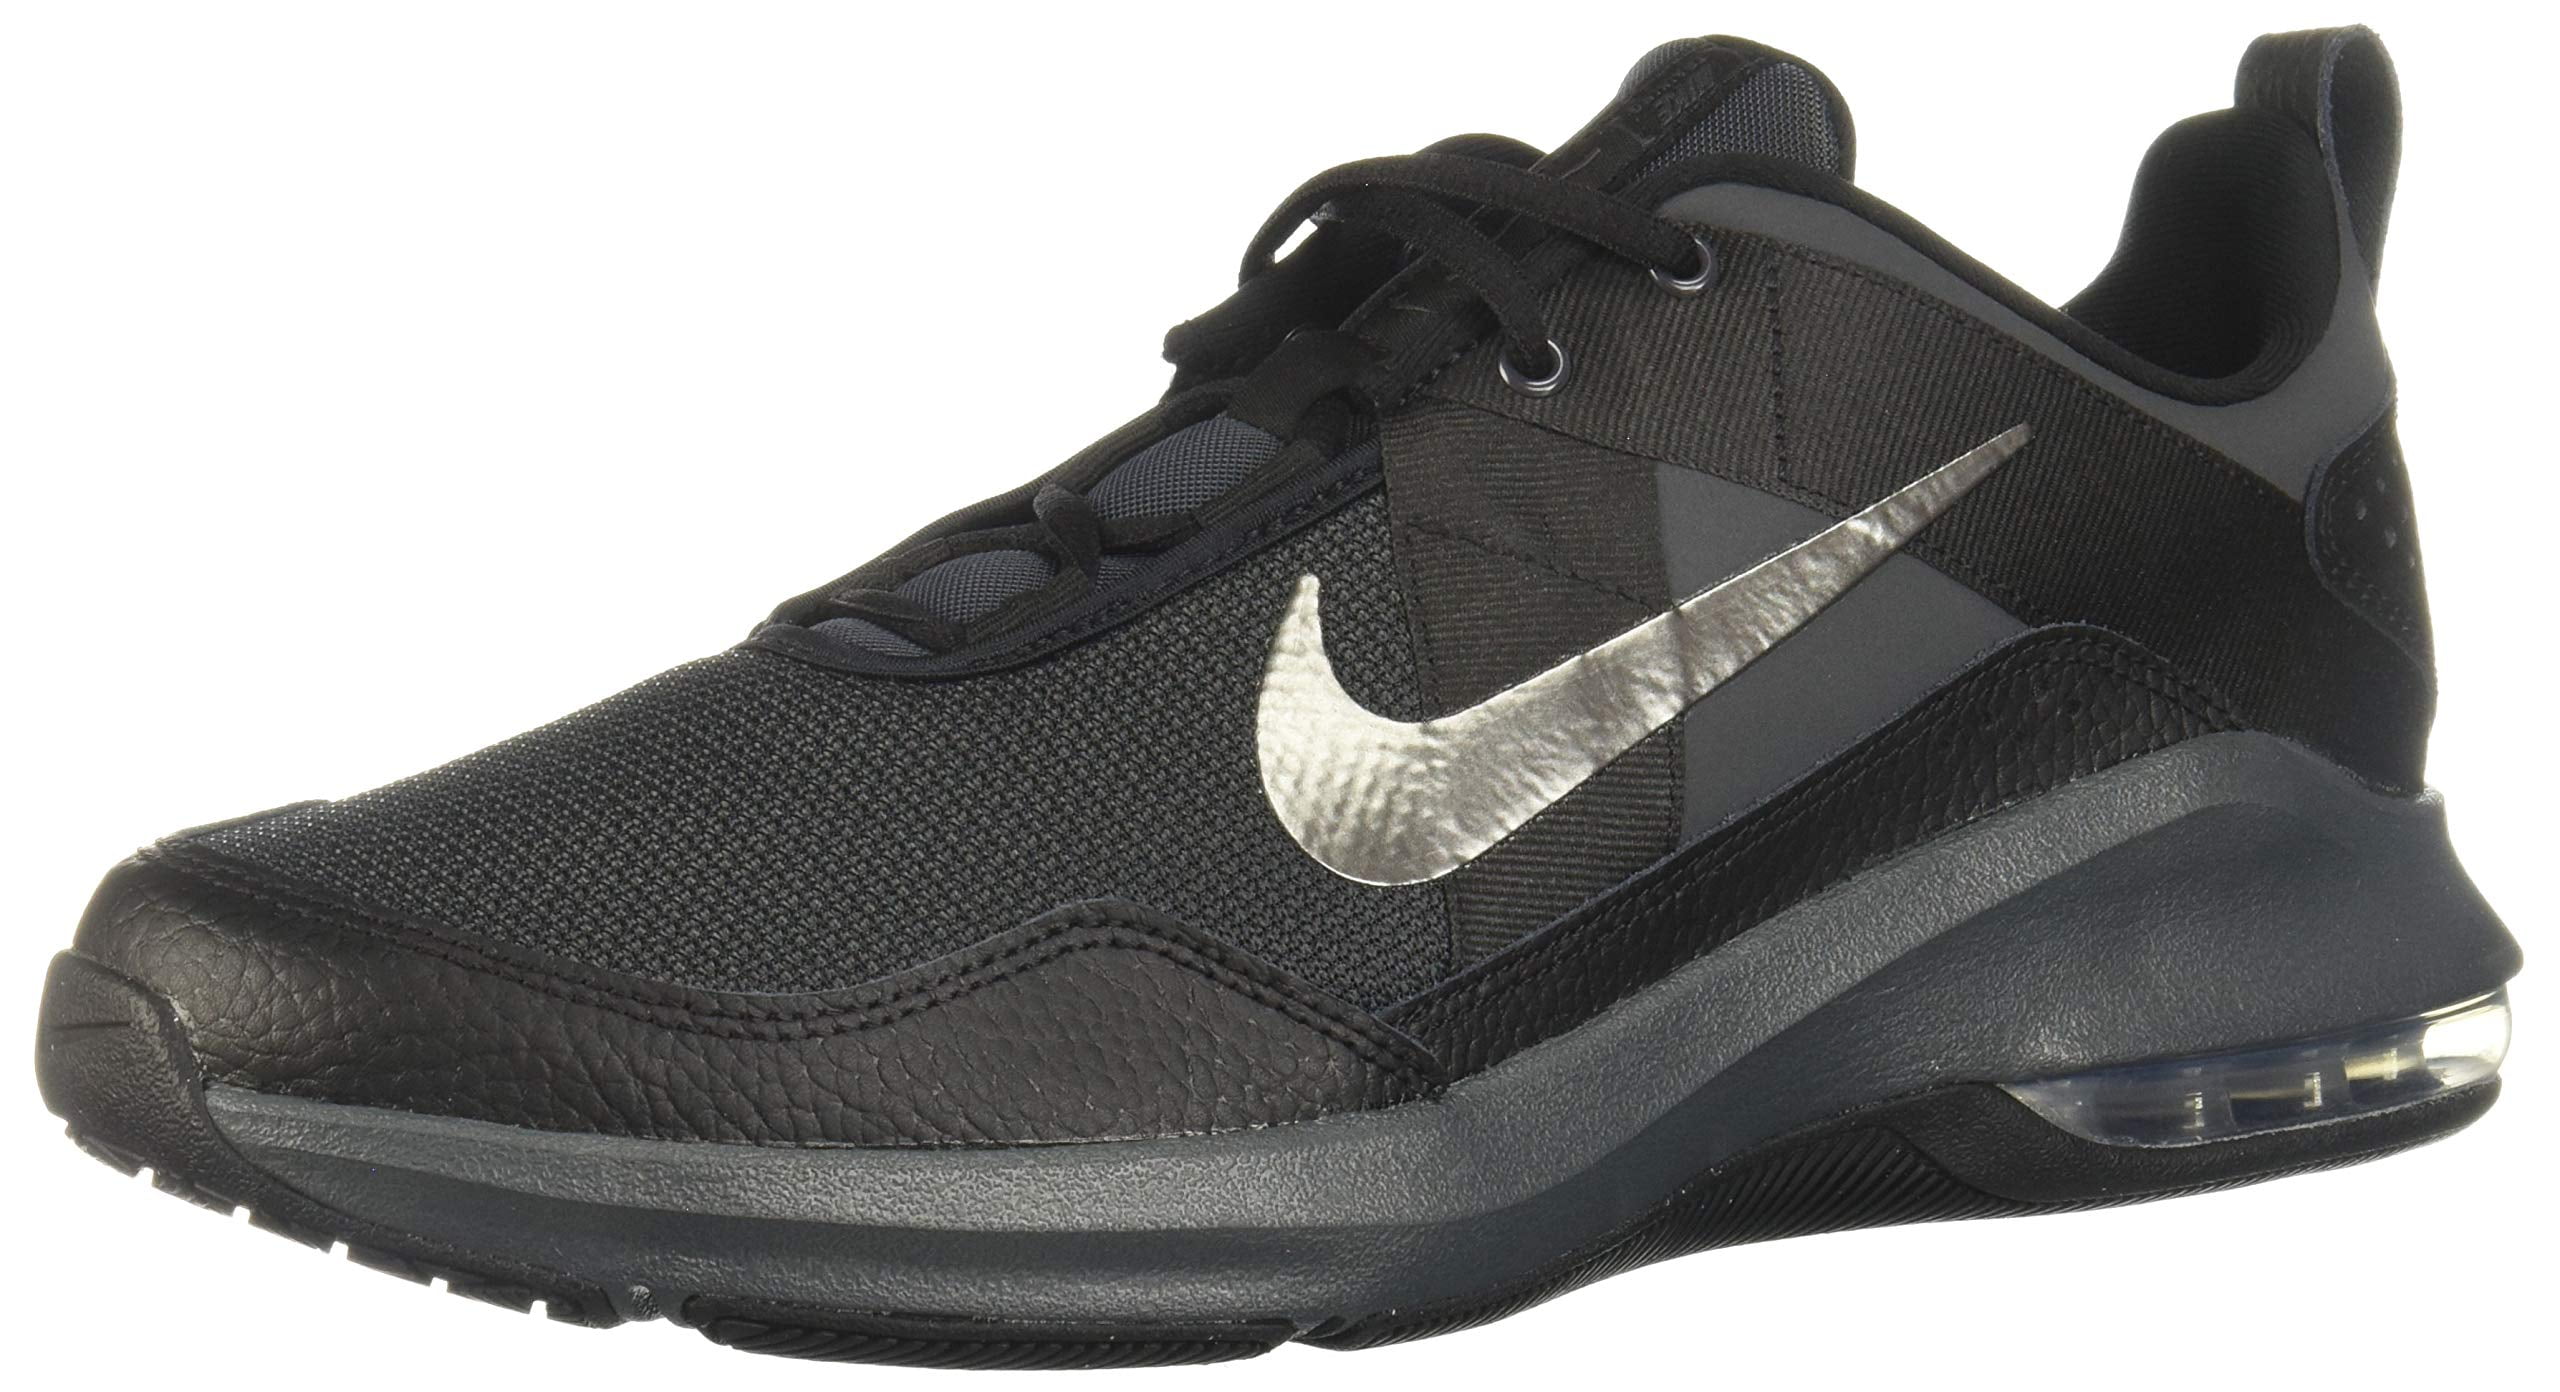 Nike - Nike AT1237-004: Air Max Alpha Trainer 2 Men's Training Shoes - Walmart.com - Walmart.com